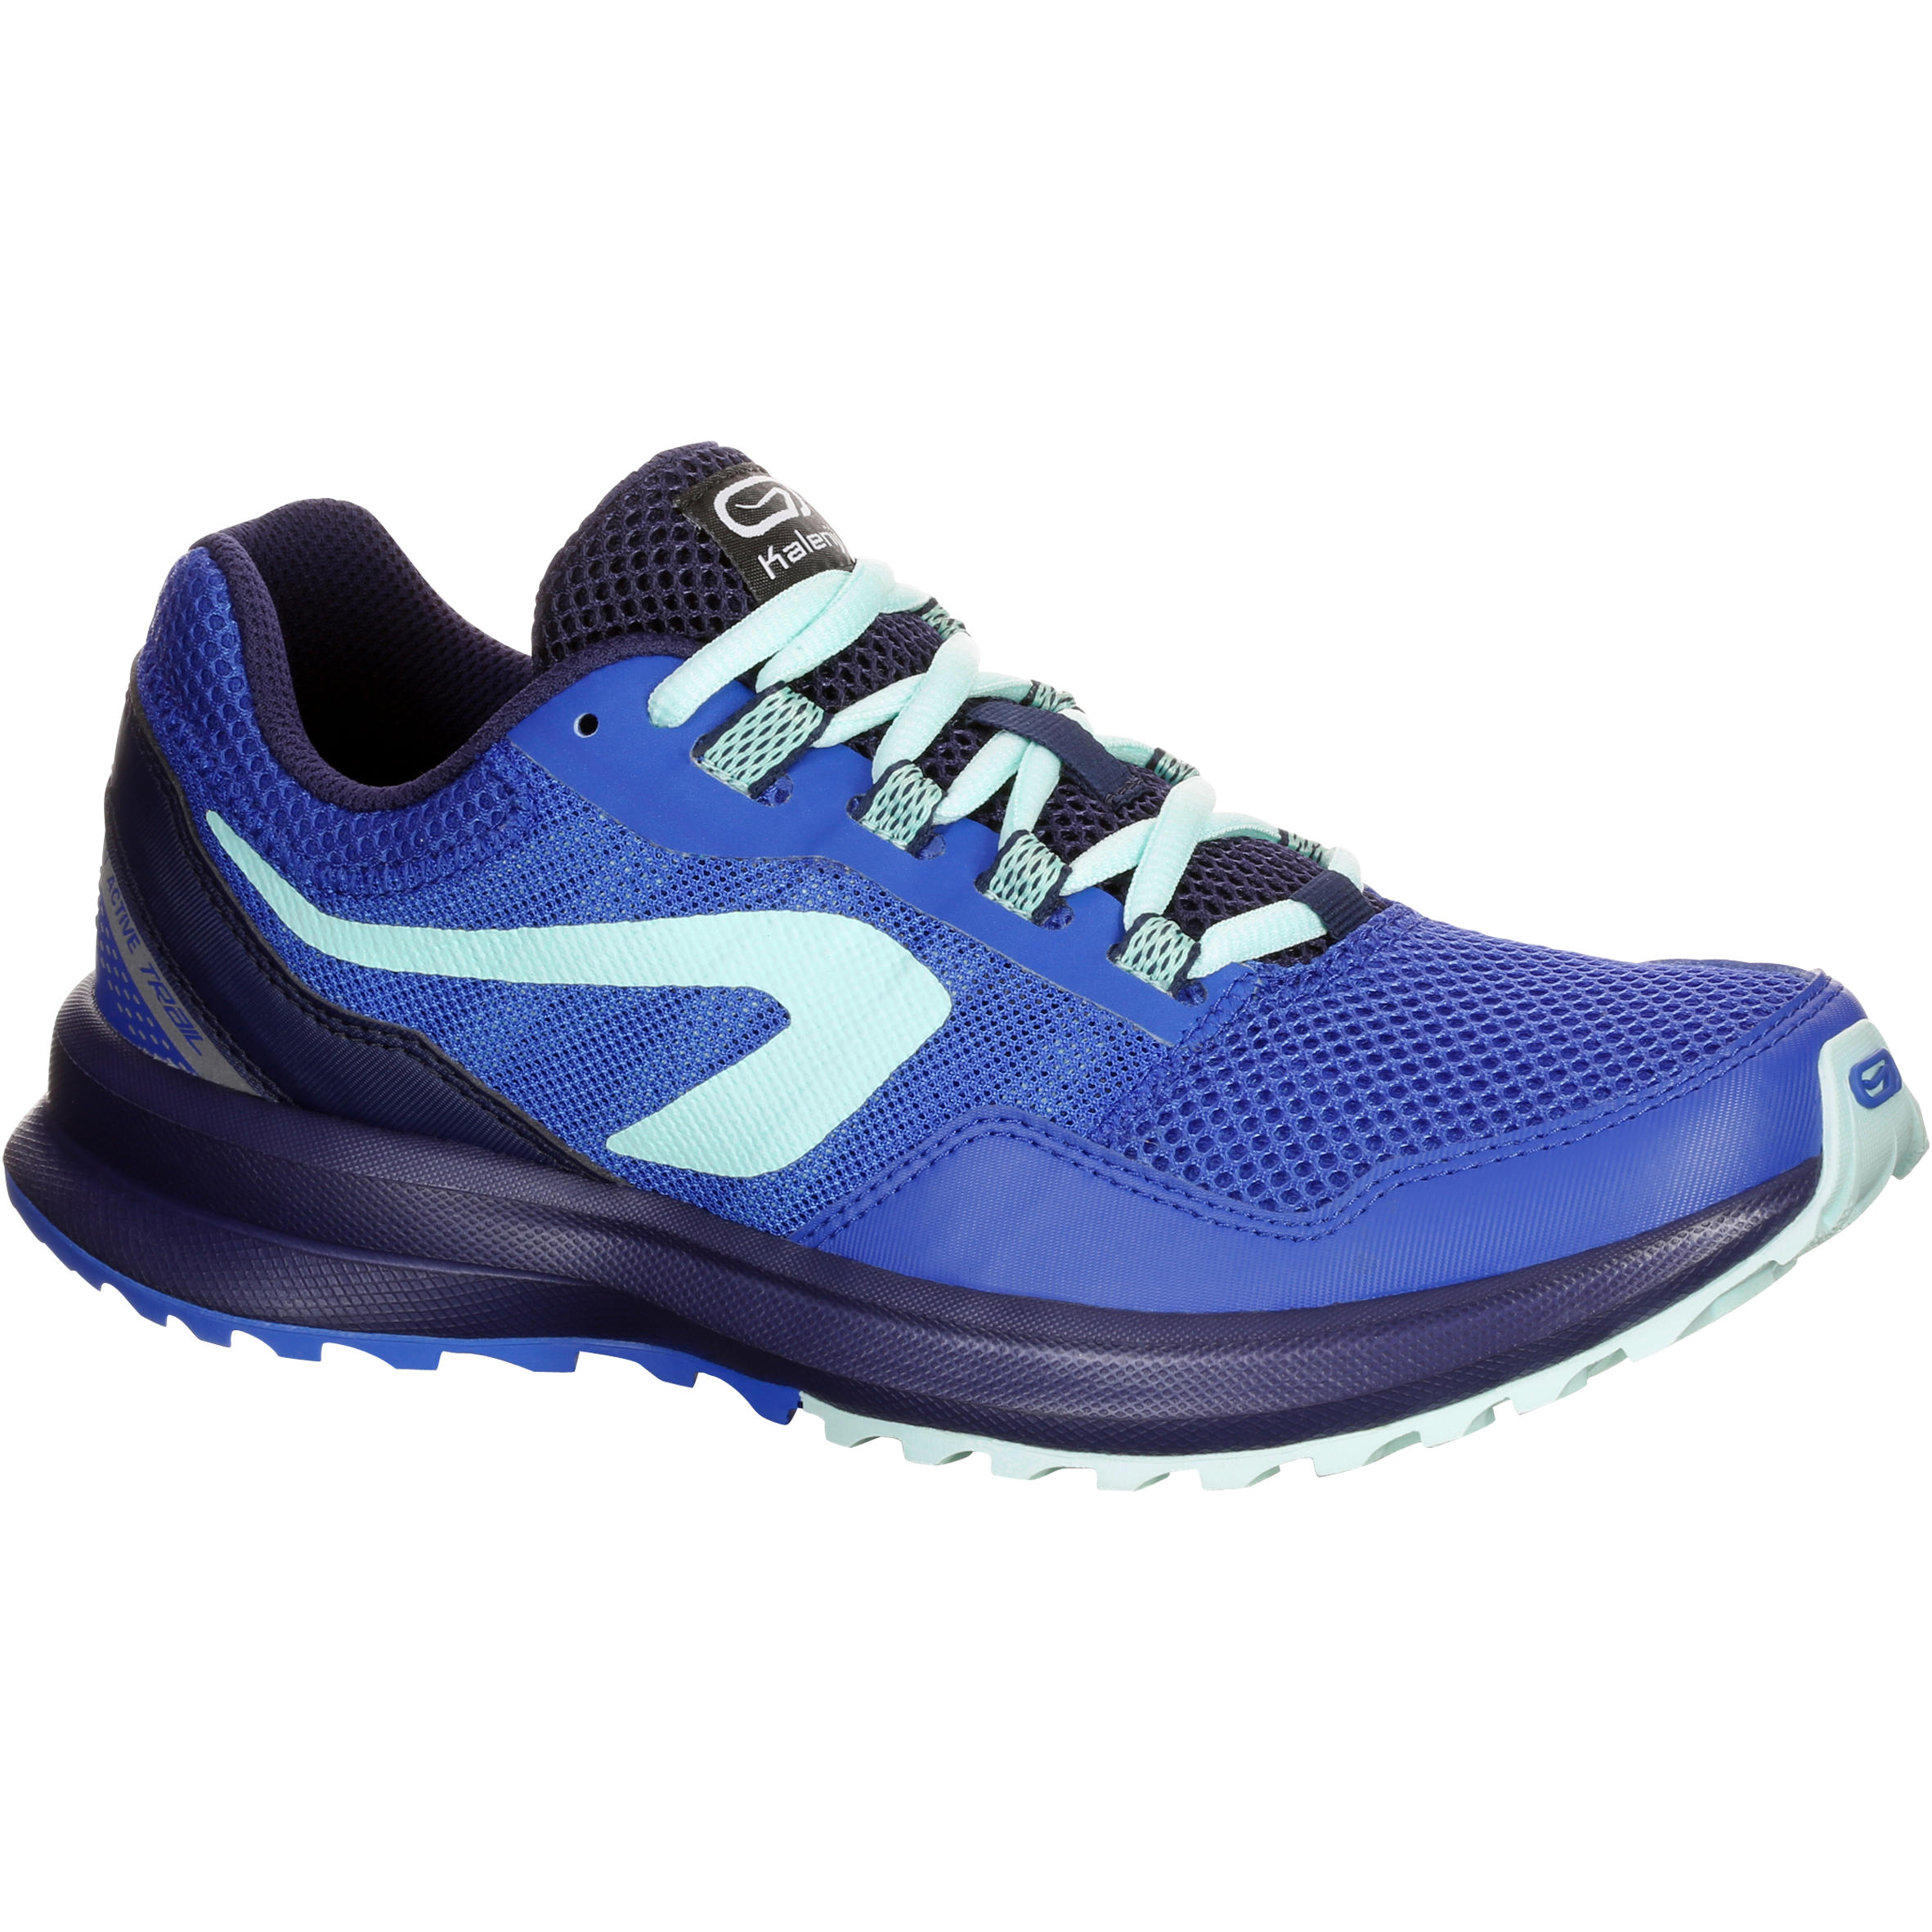 KALENJI Run Active Grip Women's Running Shoes - Blue